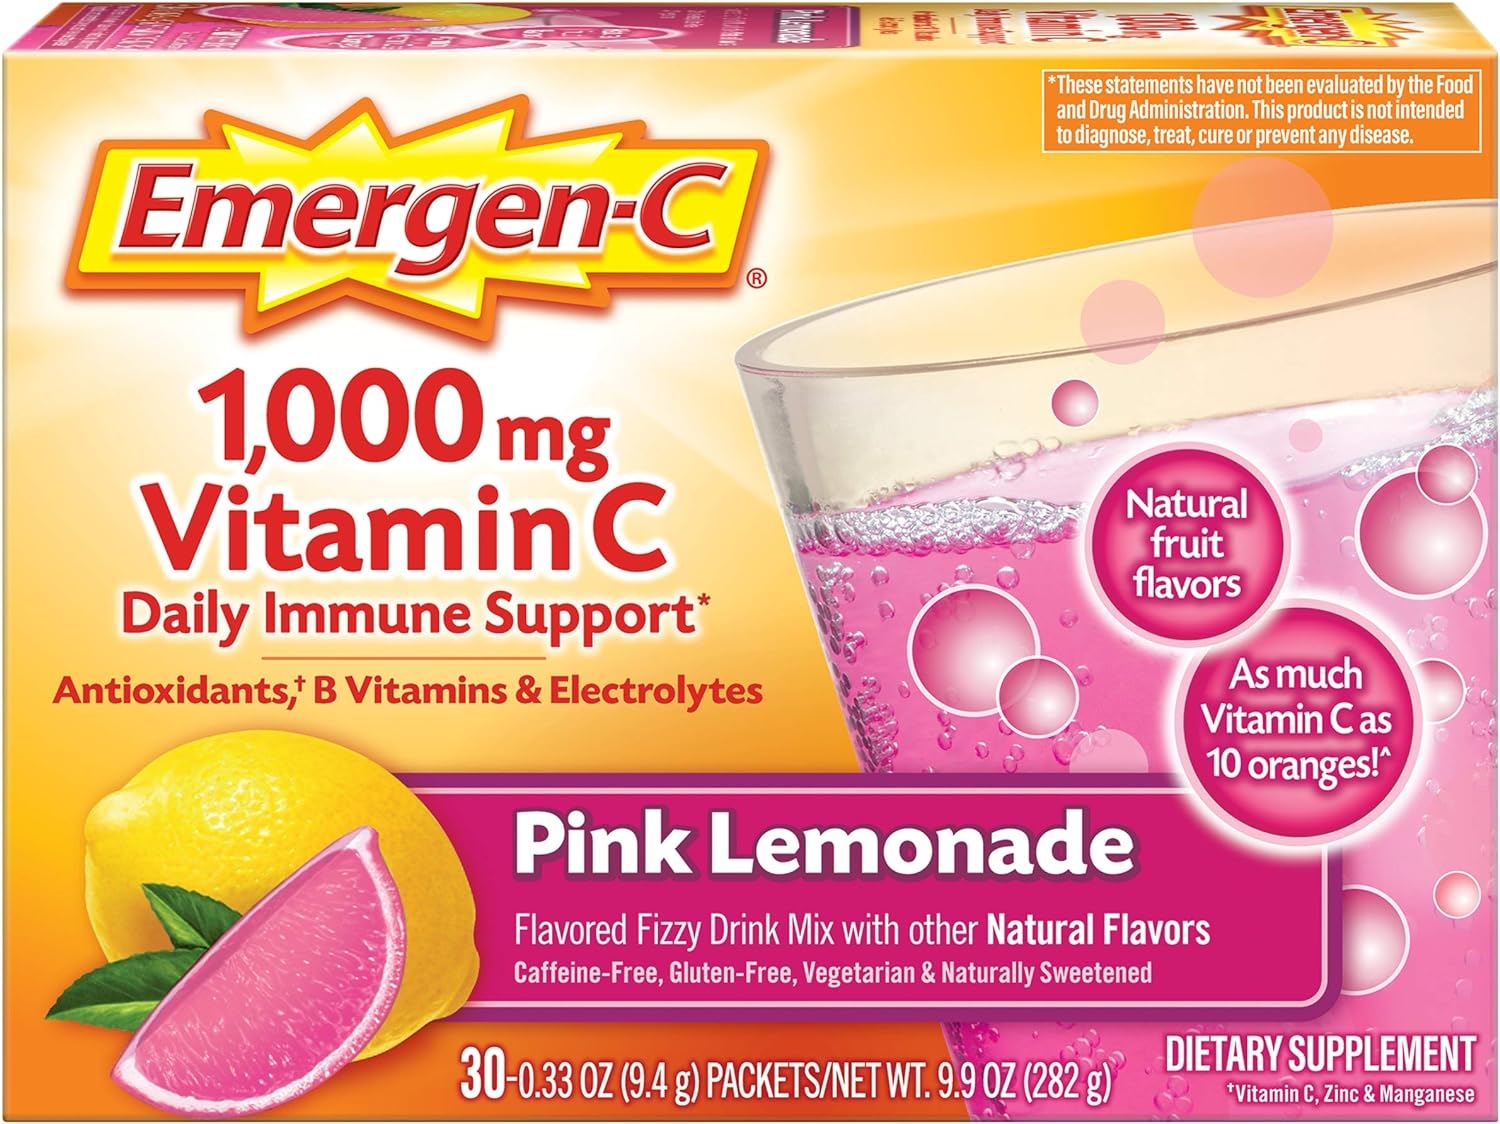 Pink Lemonade Emergen C. Emergen-C 1000mg Vitamin C Powder, With Antioxidants, B Vitamins And Electrolytes, Immunity Supplements For Immune Support, Caffeine Free Fizzy Drink Mix, Pink Lemonade Flavor - 30 Count